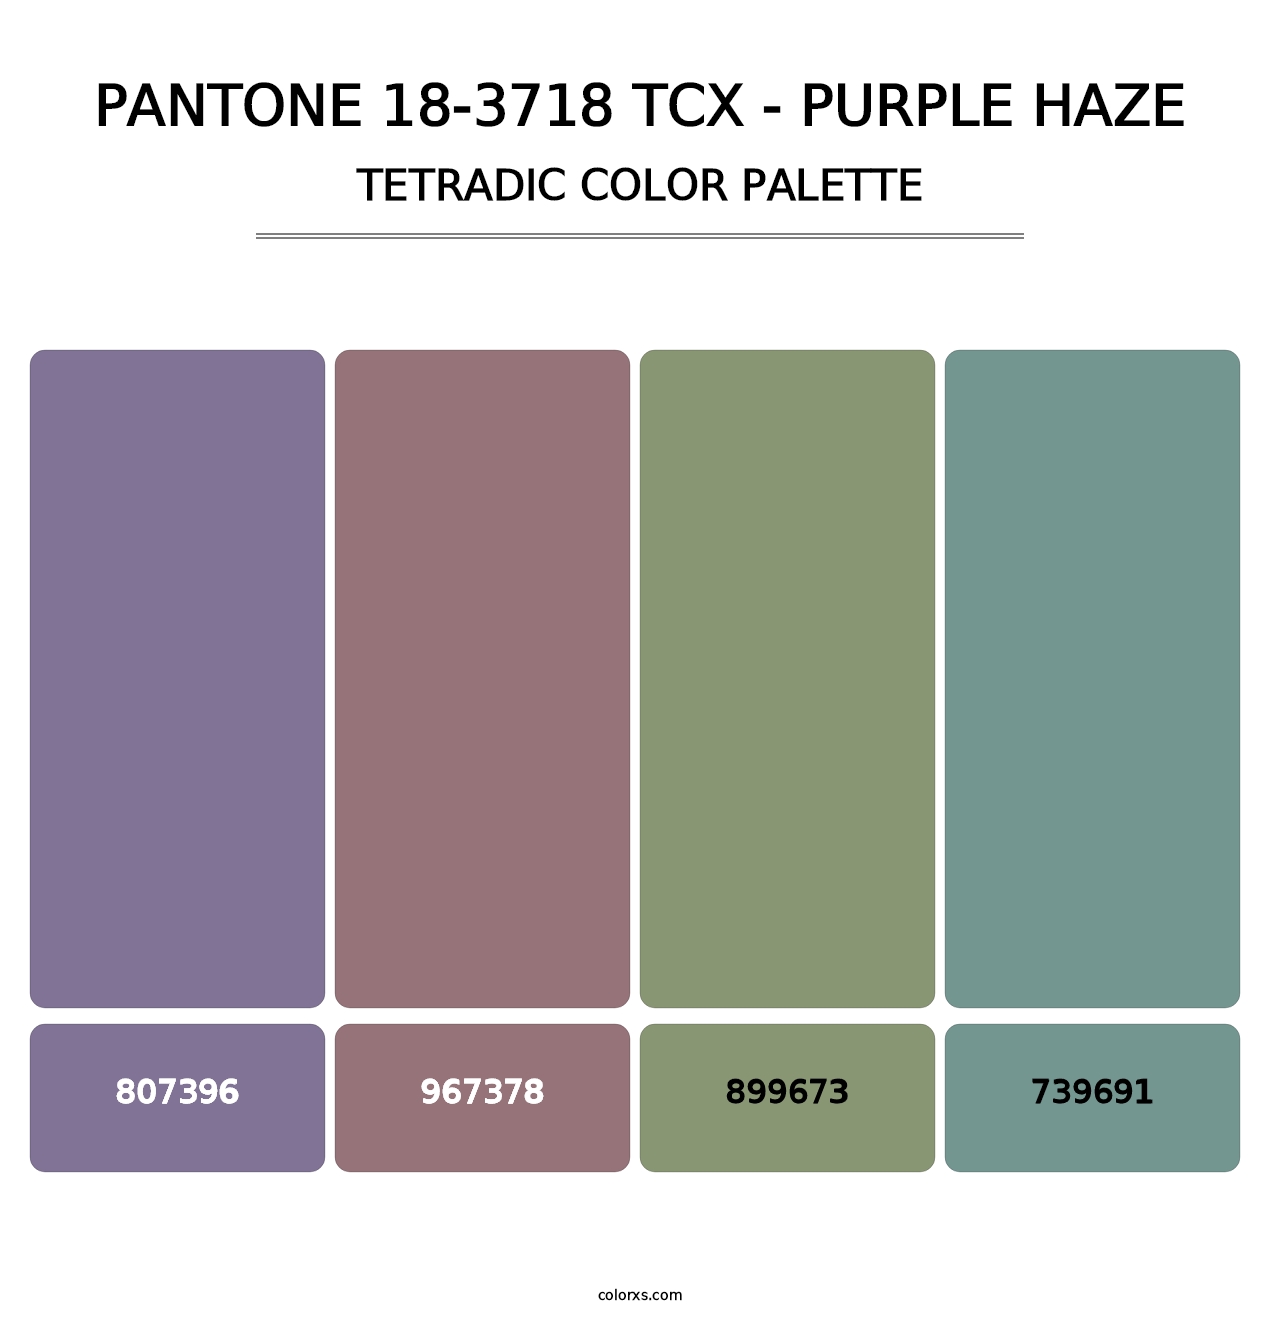 PANTONE 18-3718 TCX - Purple Haze - Tetradic Color Palette